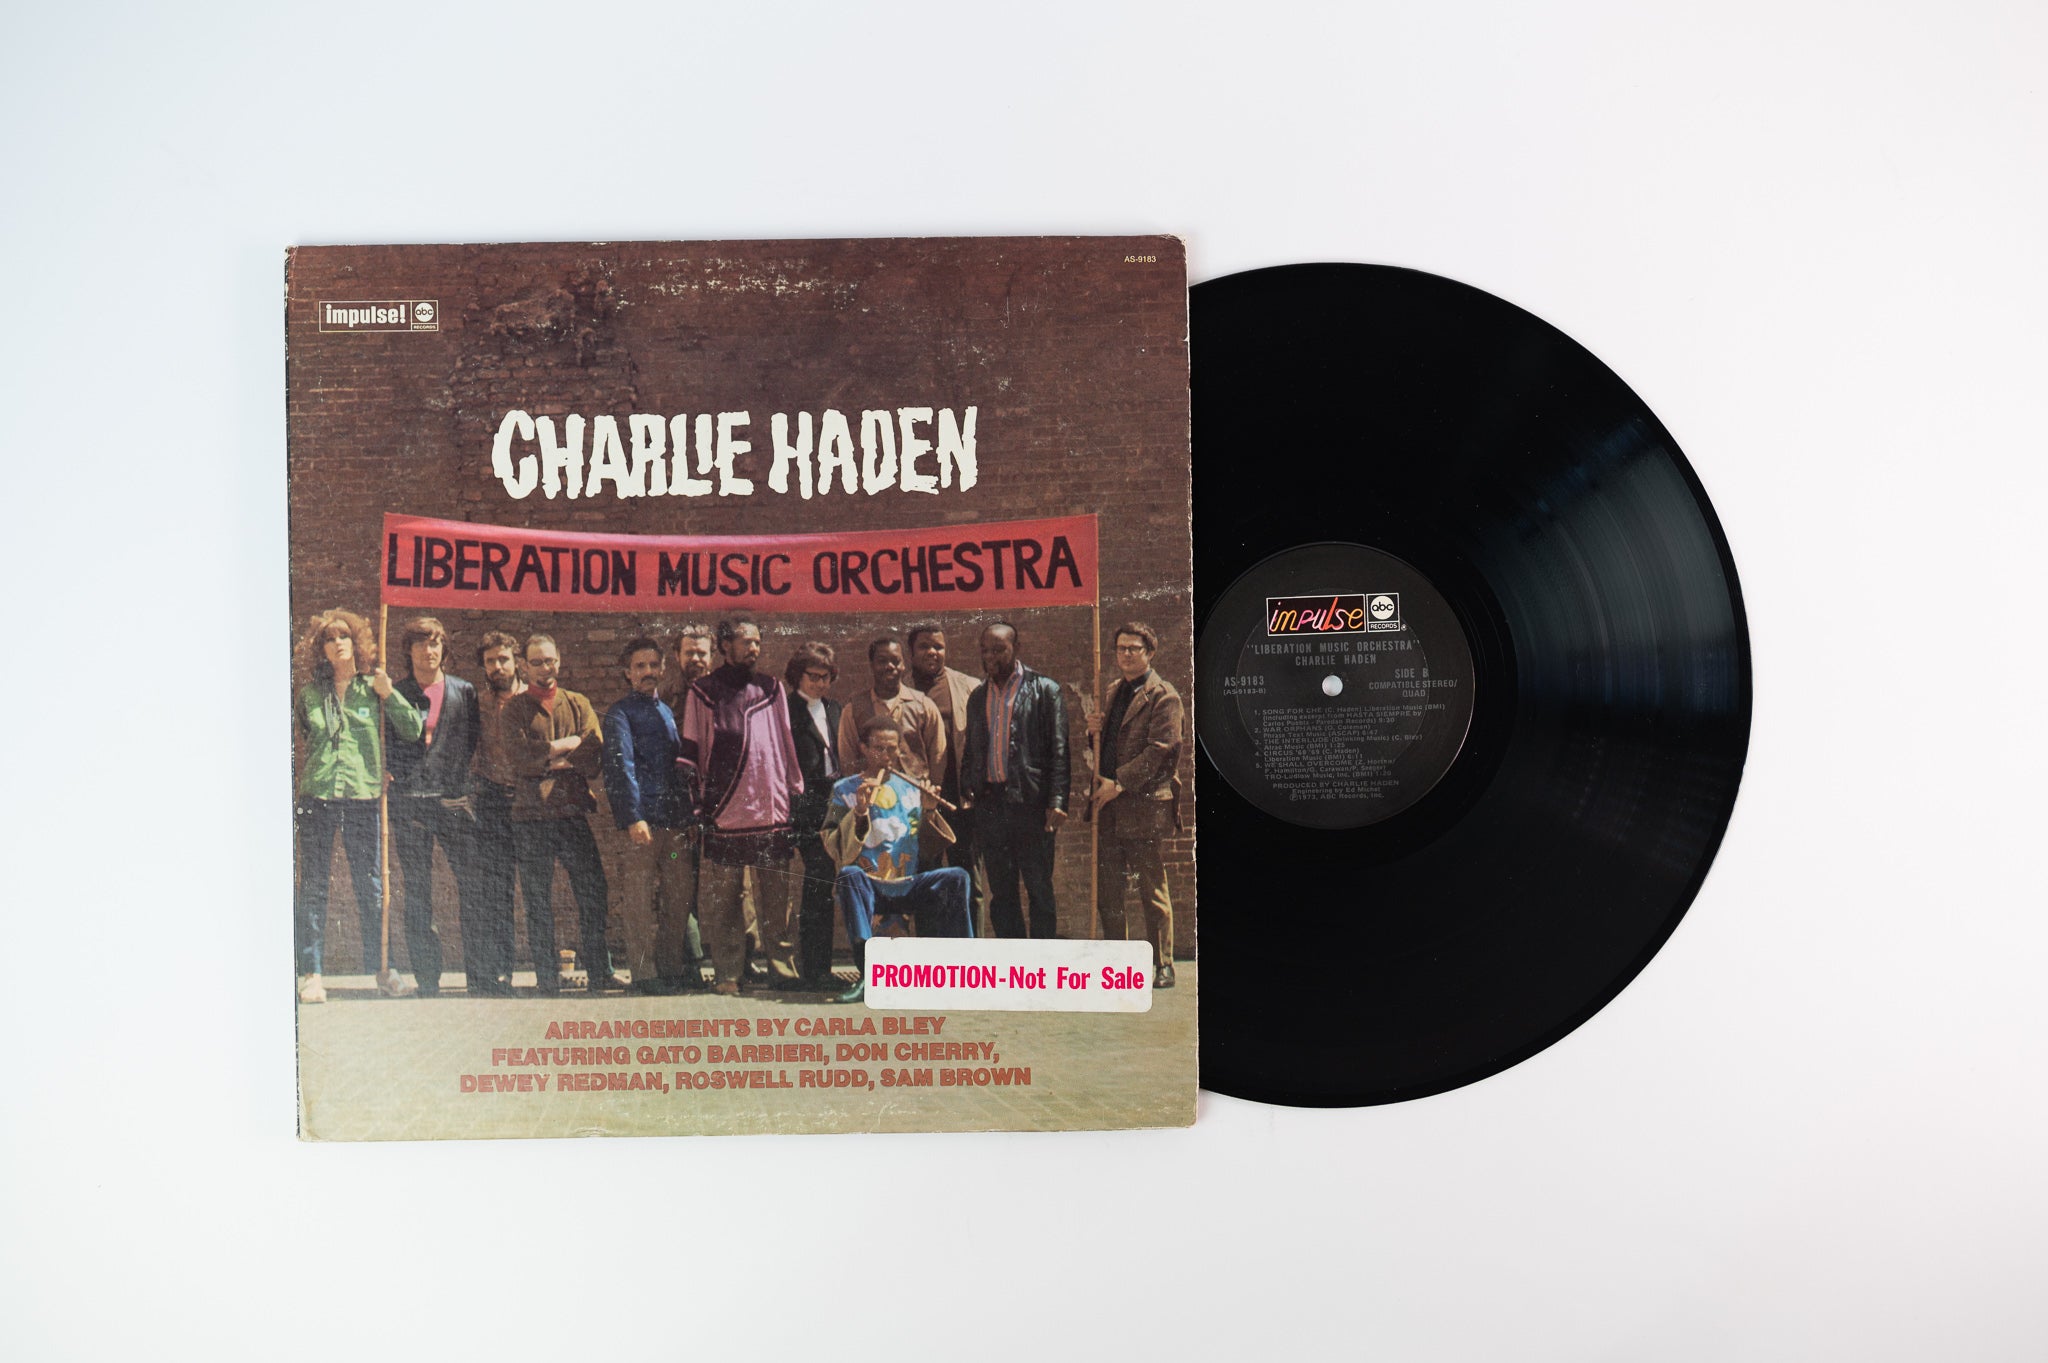 Charlie Haden - Liberation Music Orchestra on ABC Impulse Reissue